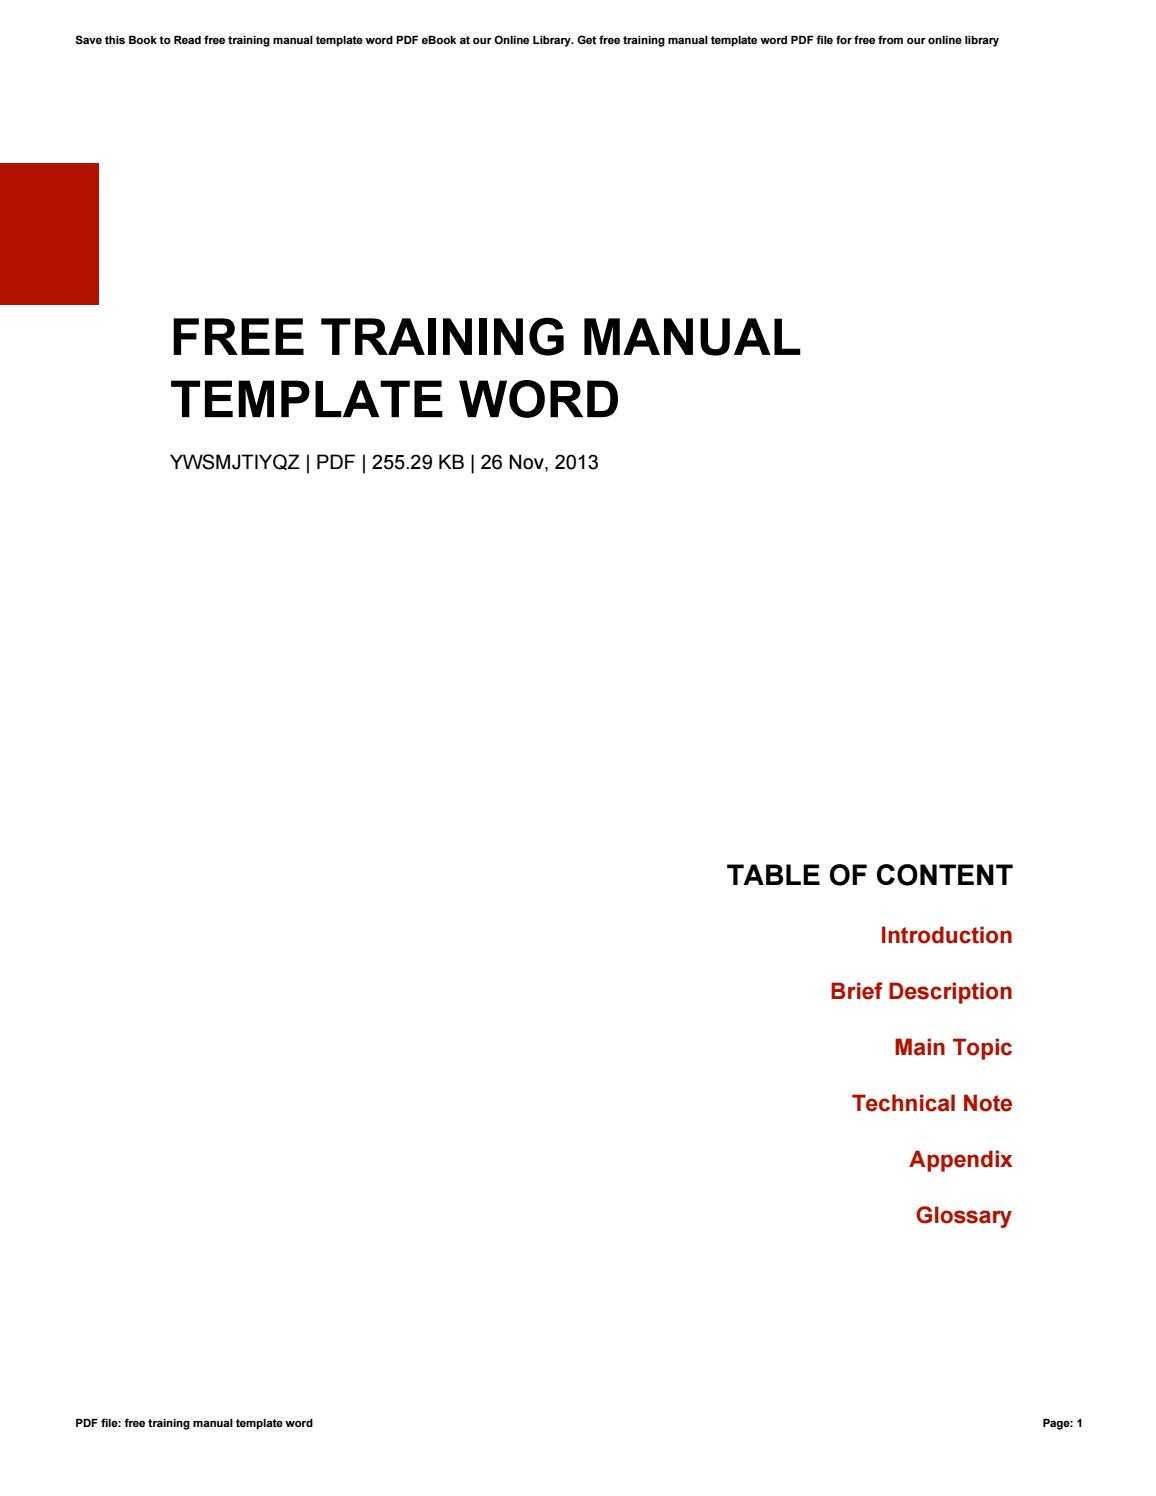 Free Training Manual Template Wordkazelink257 - Issuu Pertaining To Training Documentation Template Word